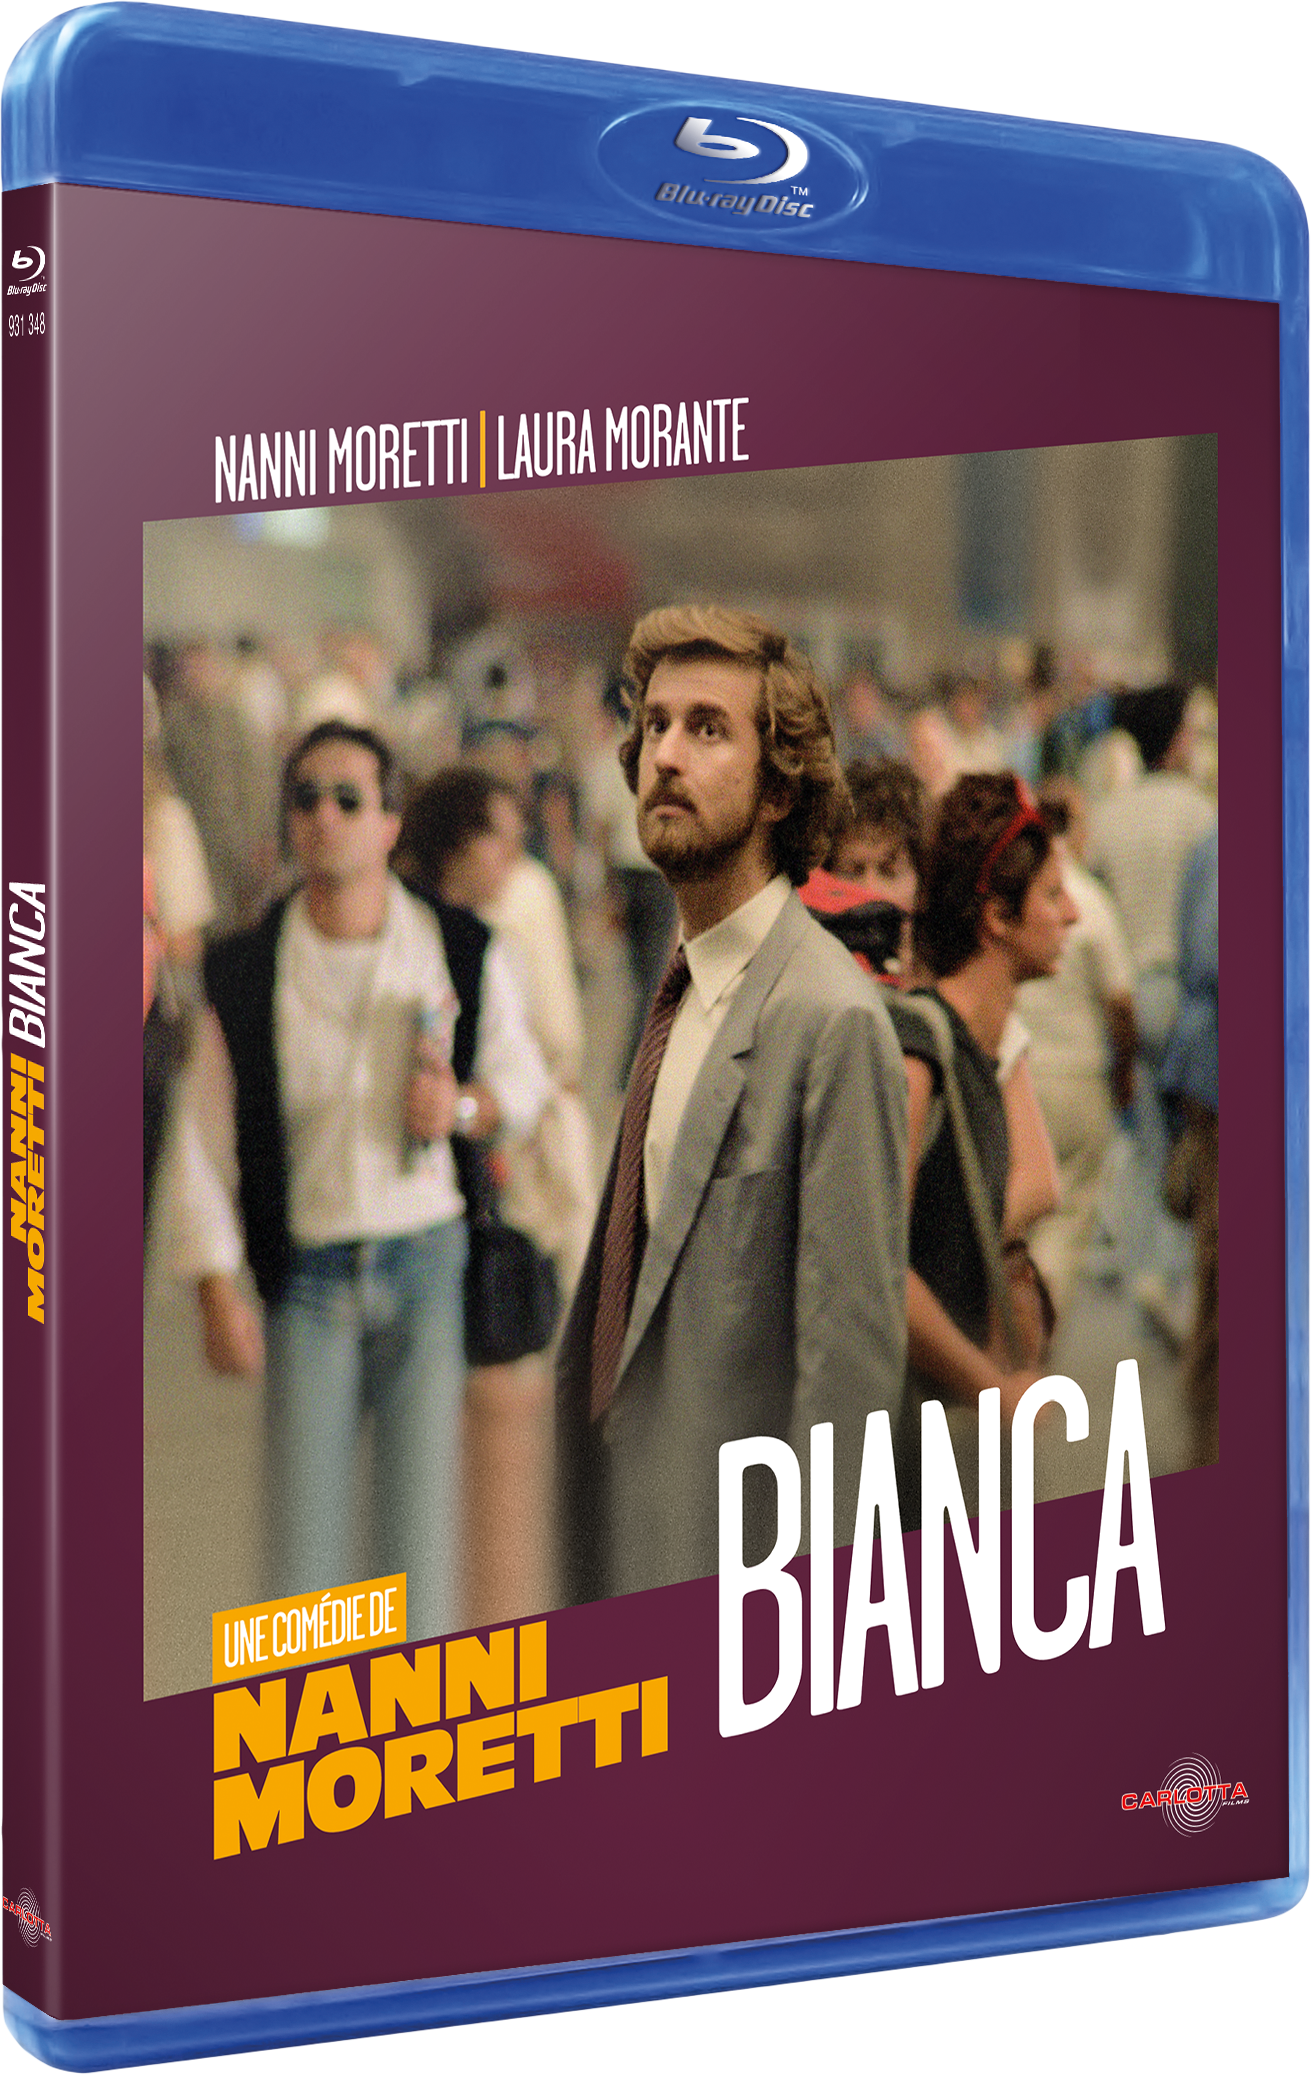 Bianca by Nanni Moretti